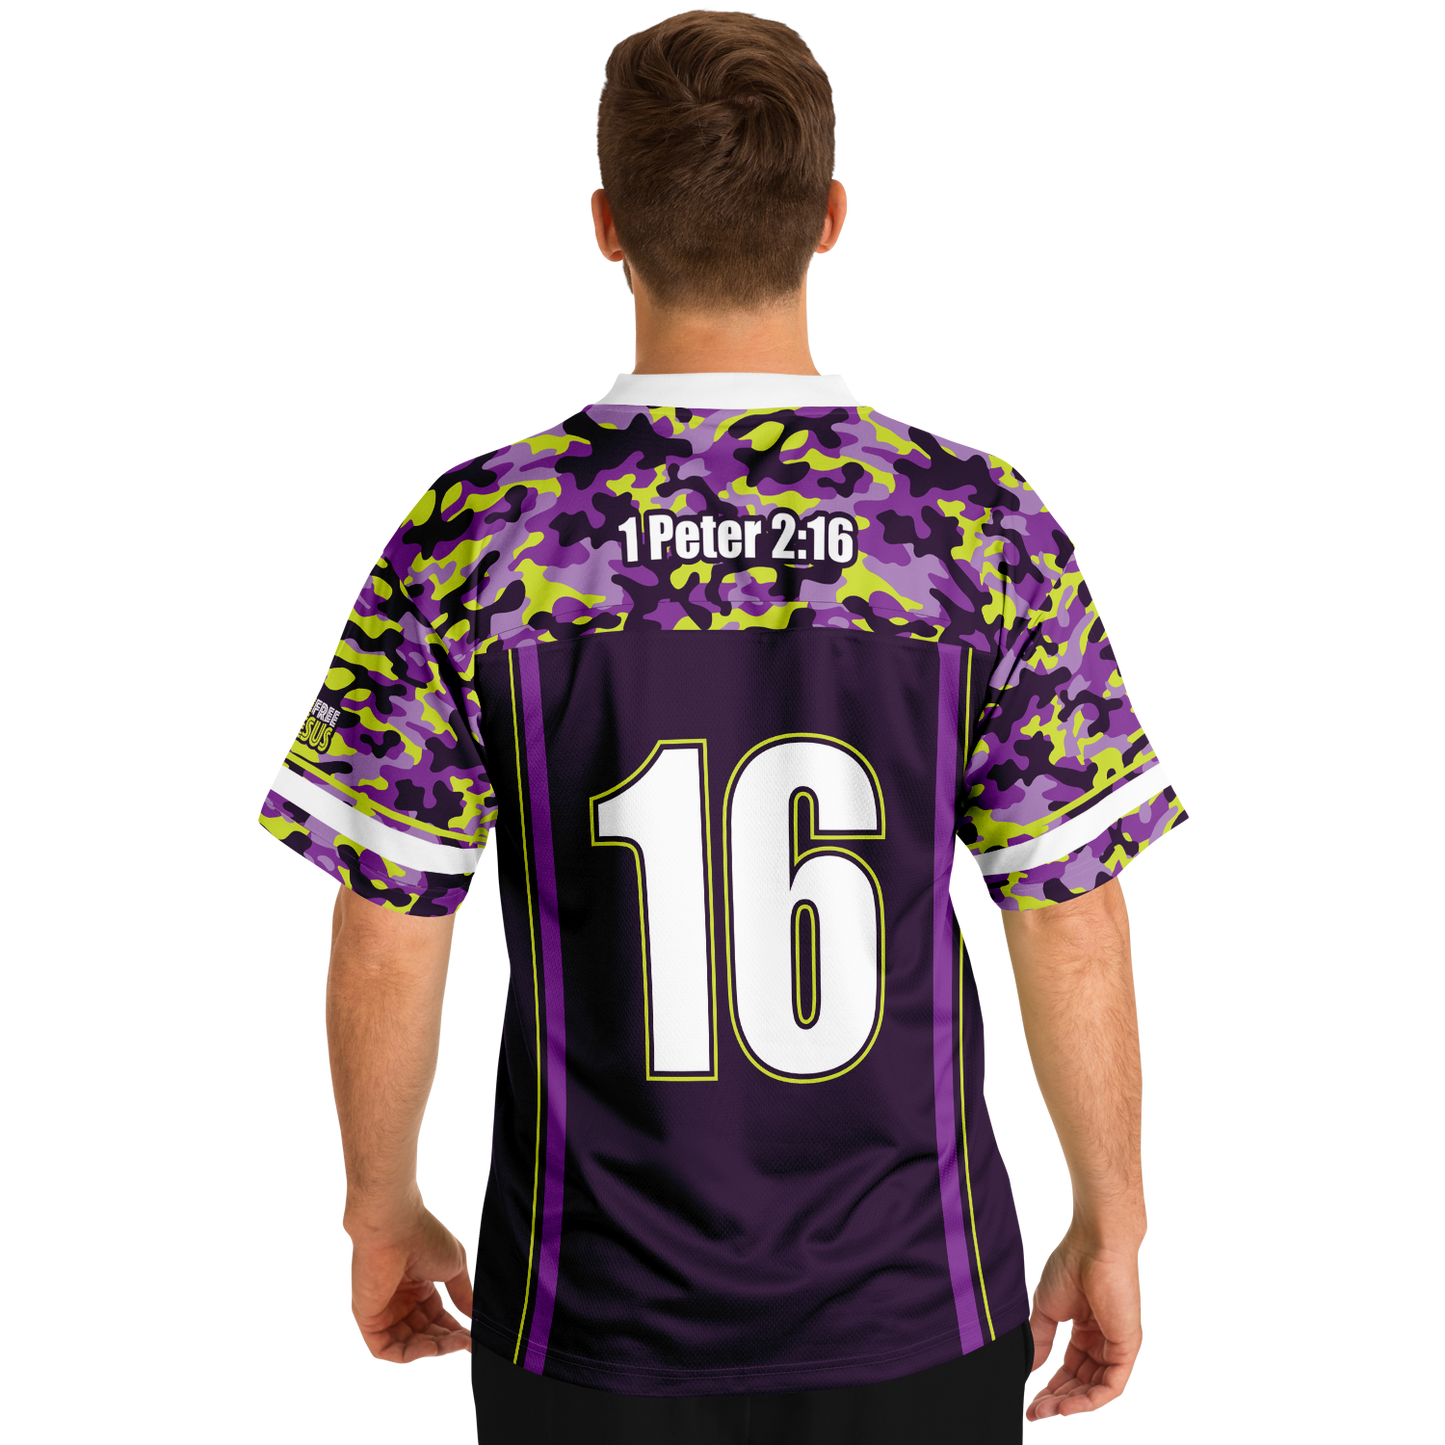 Mavrix Purple/Volt Camo Football Jersey